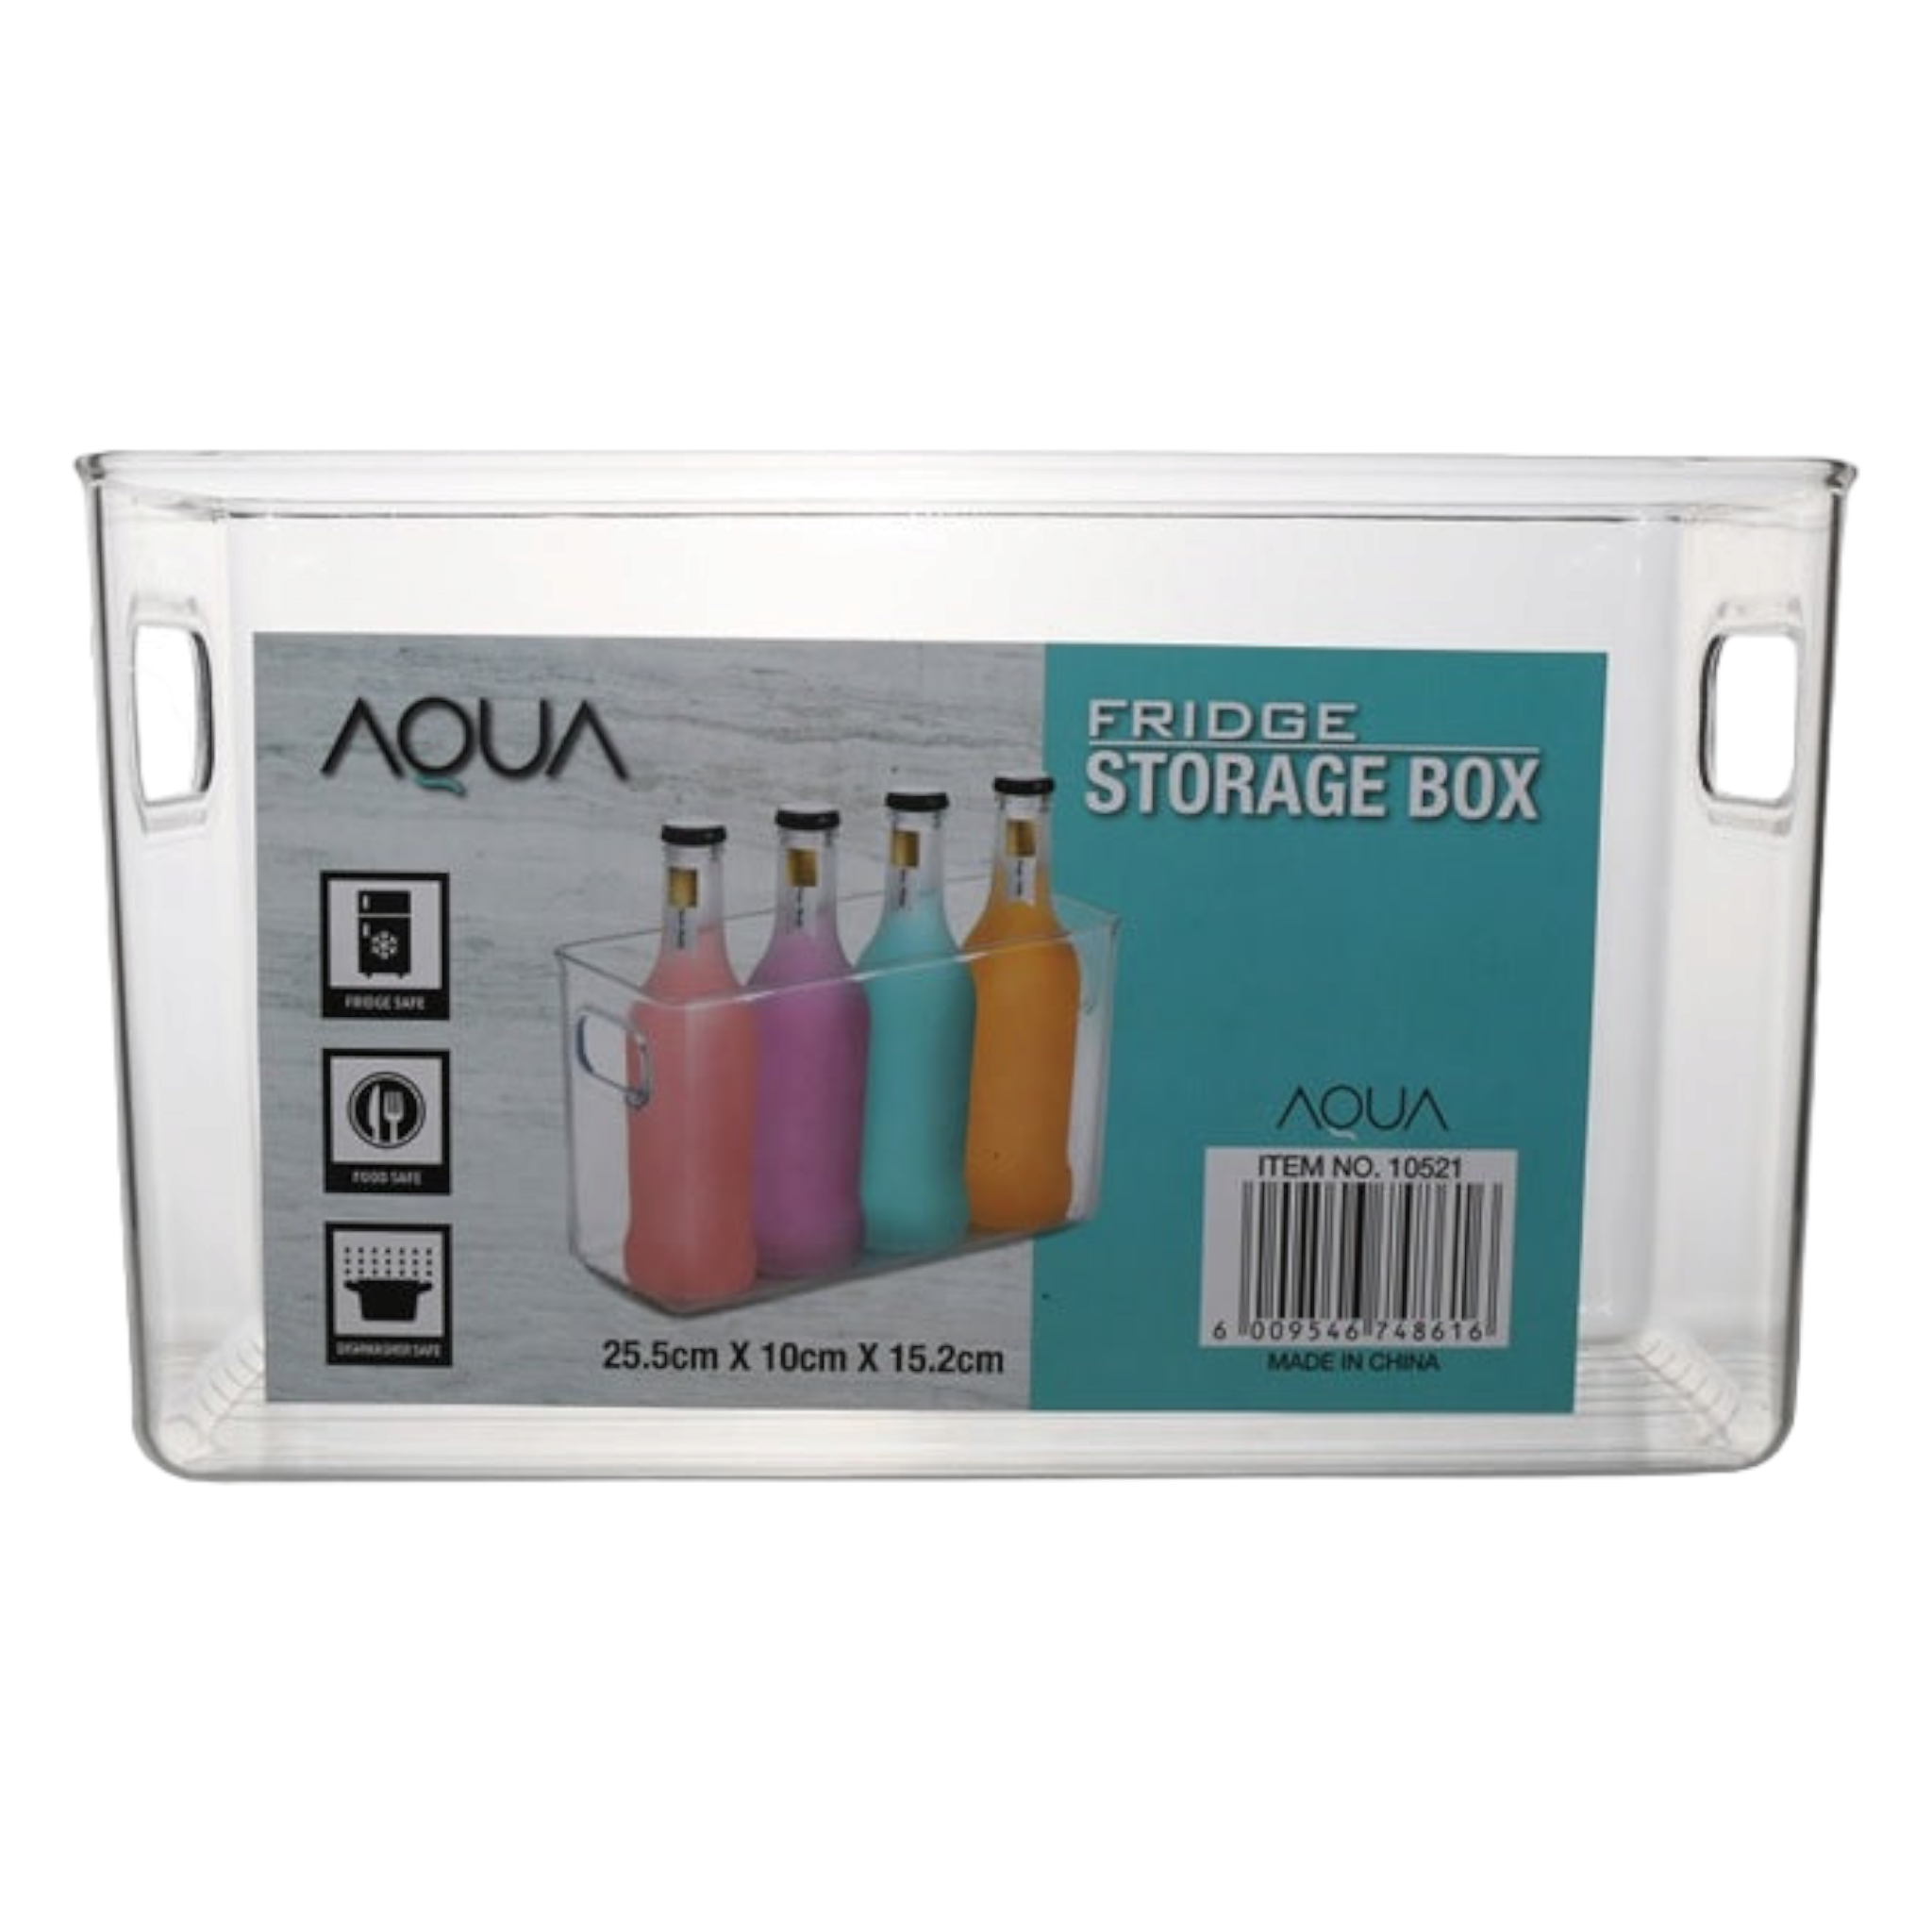 Aqua Fresh Keeper 25.4x15.2 Fridge Storage Box 10521